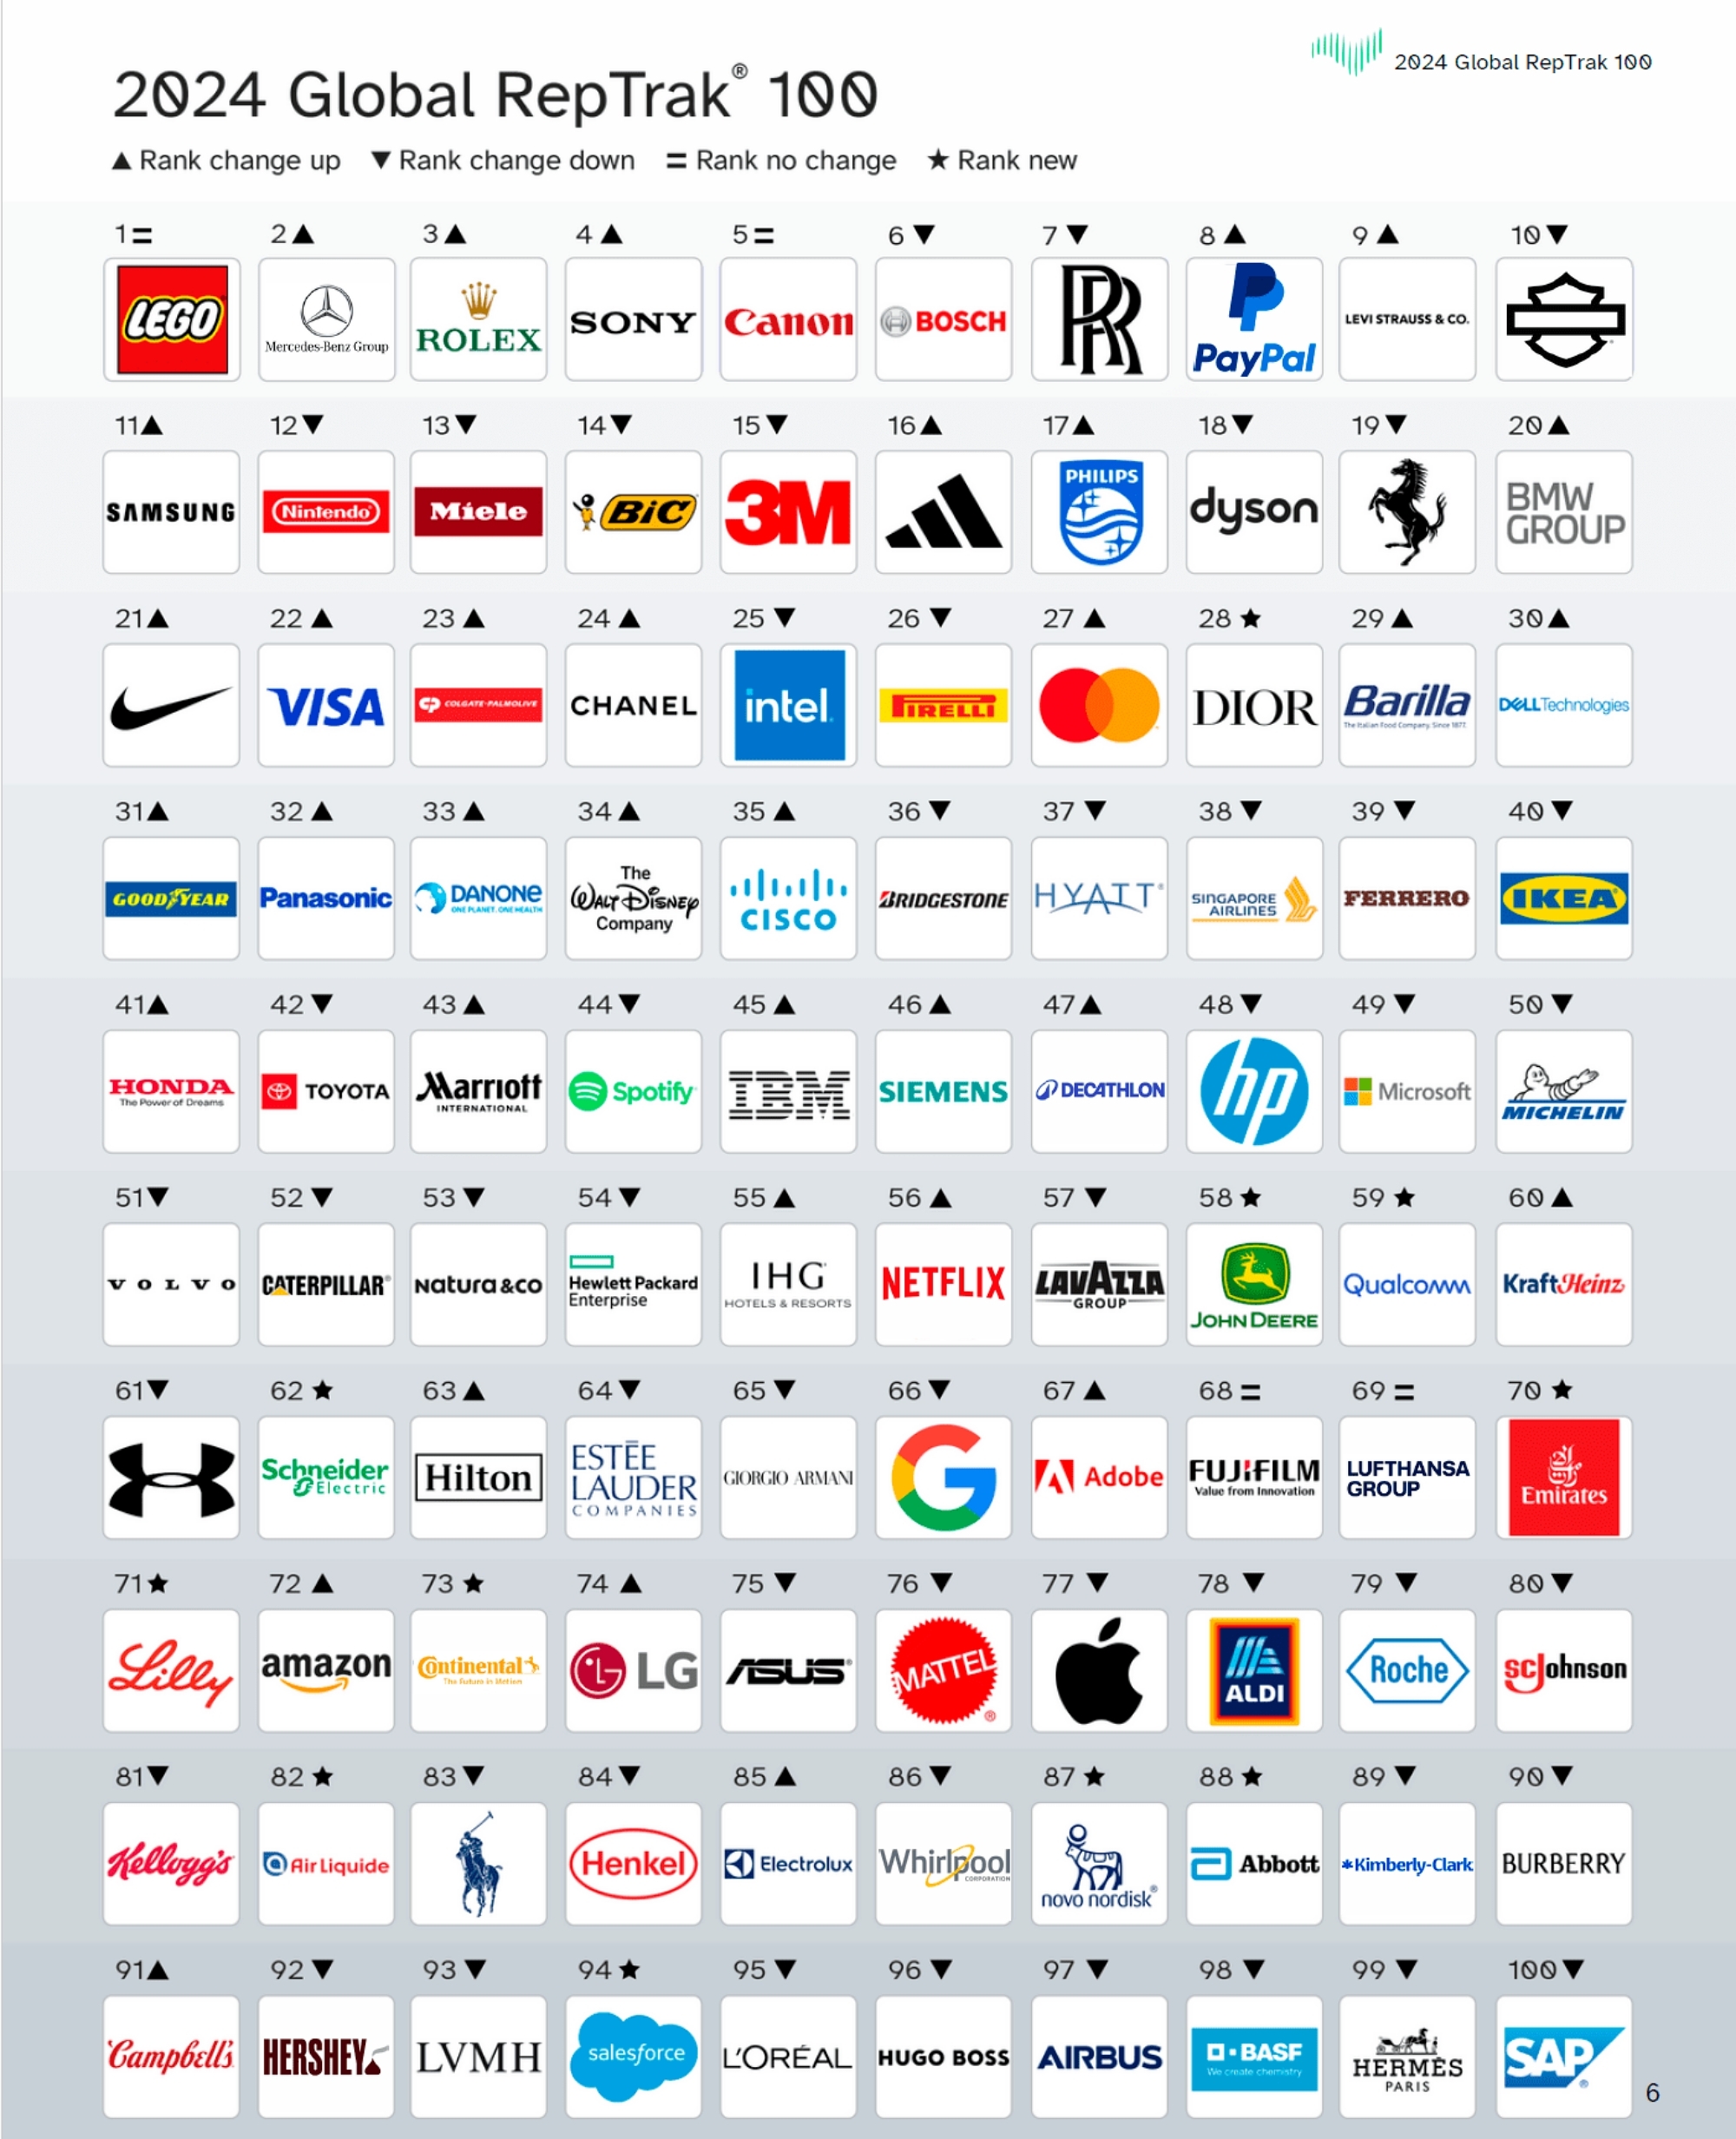 Las 100 empresas más reputadas del mundo, según RepTrak.